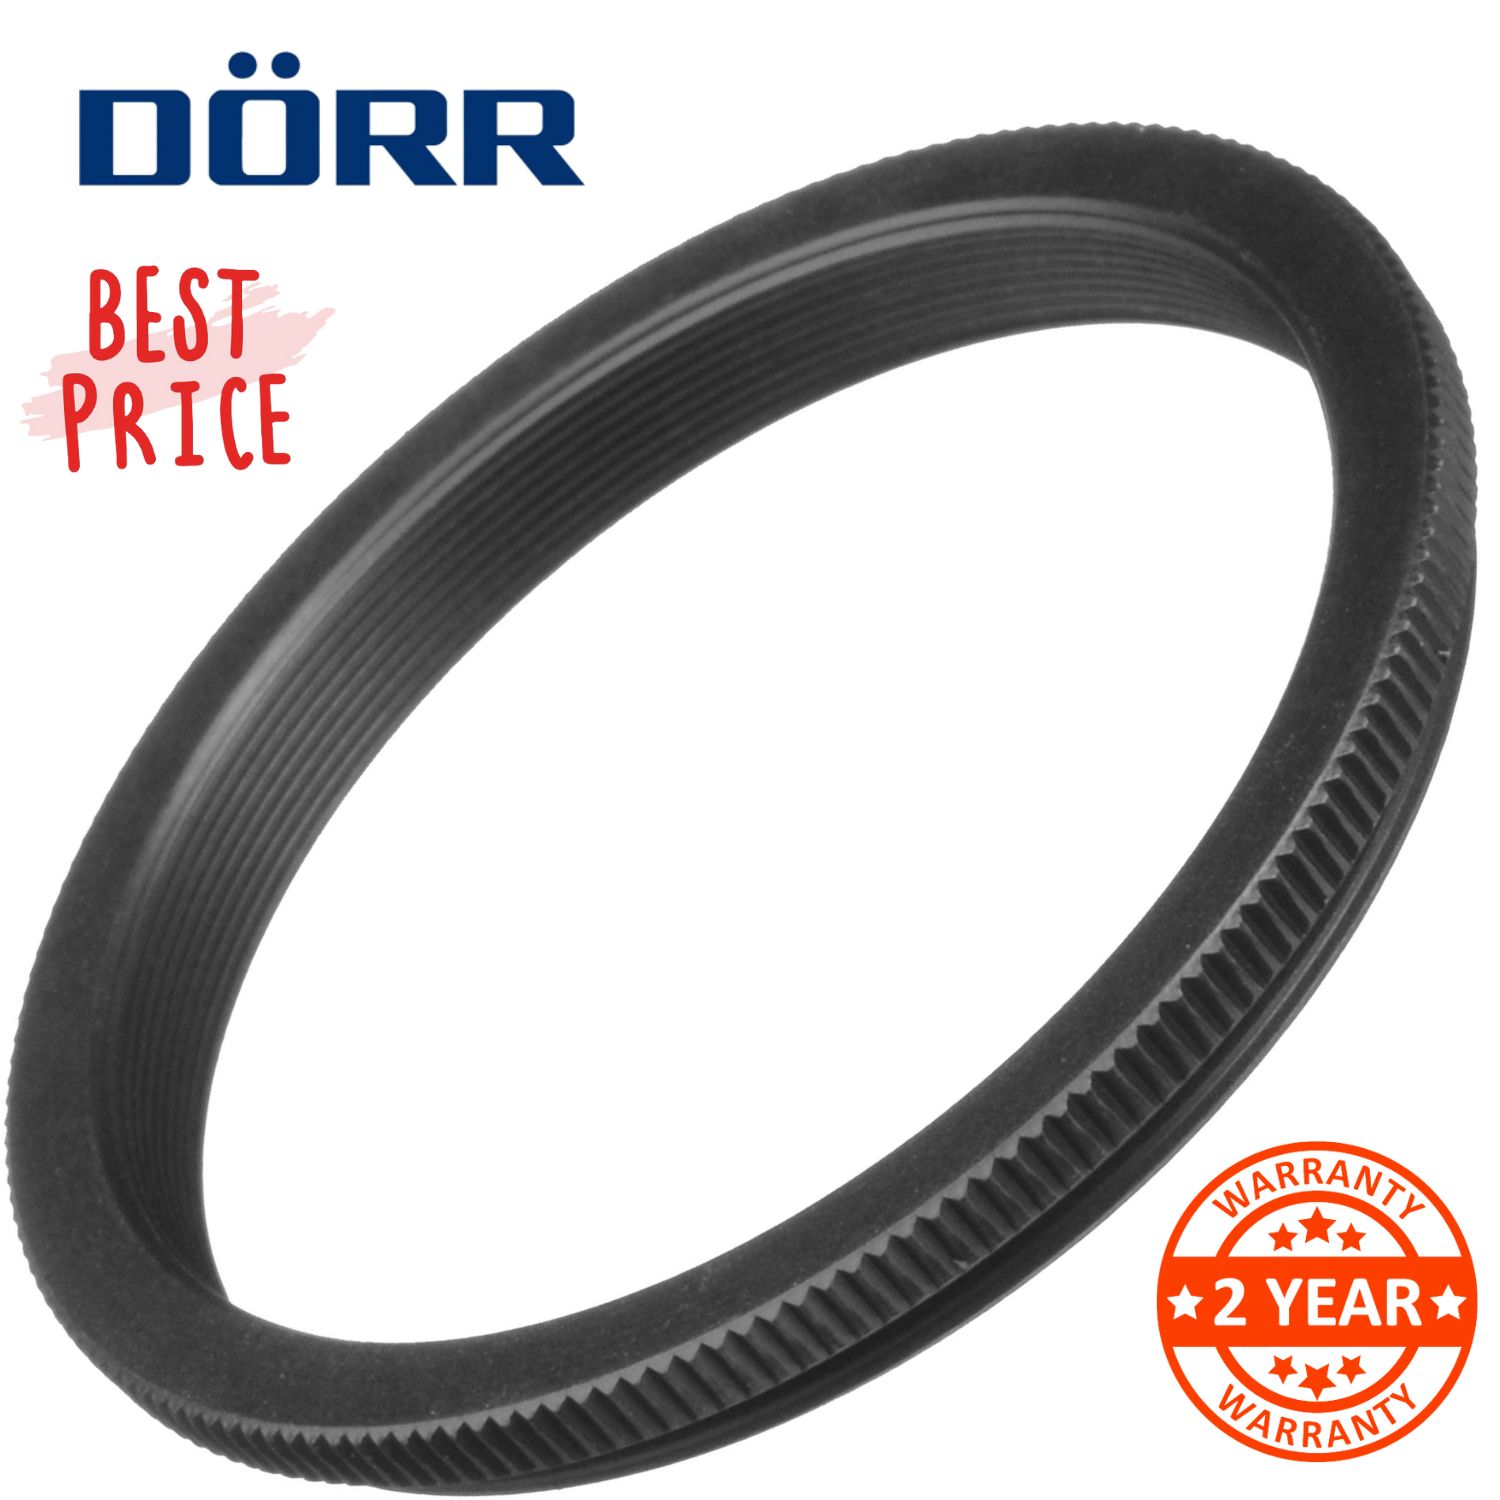 Dorr 55-52mm Step-Down Ring